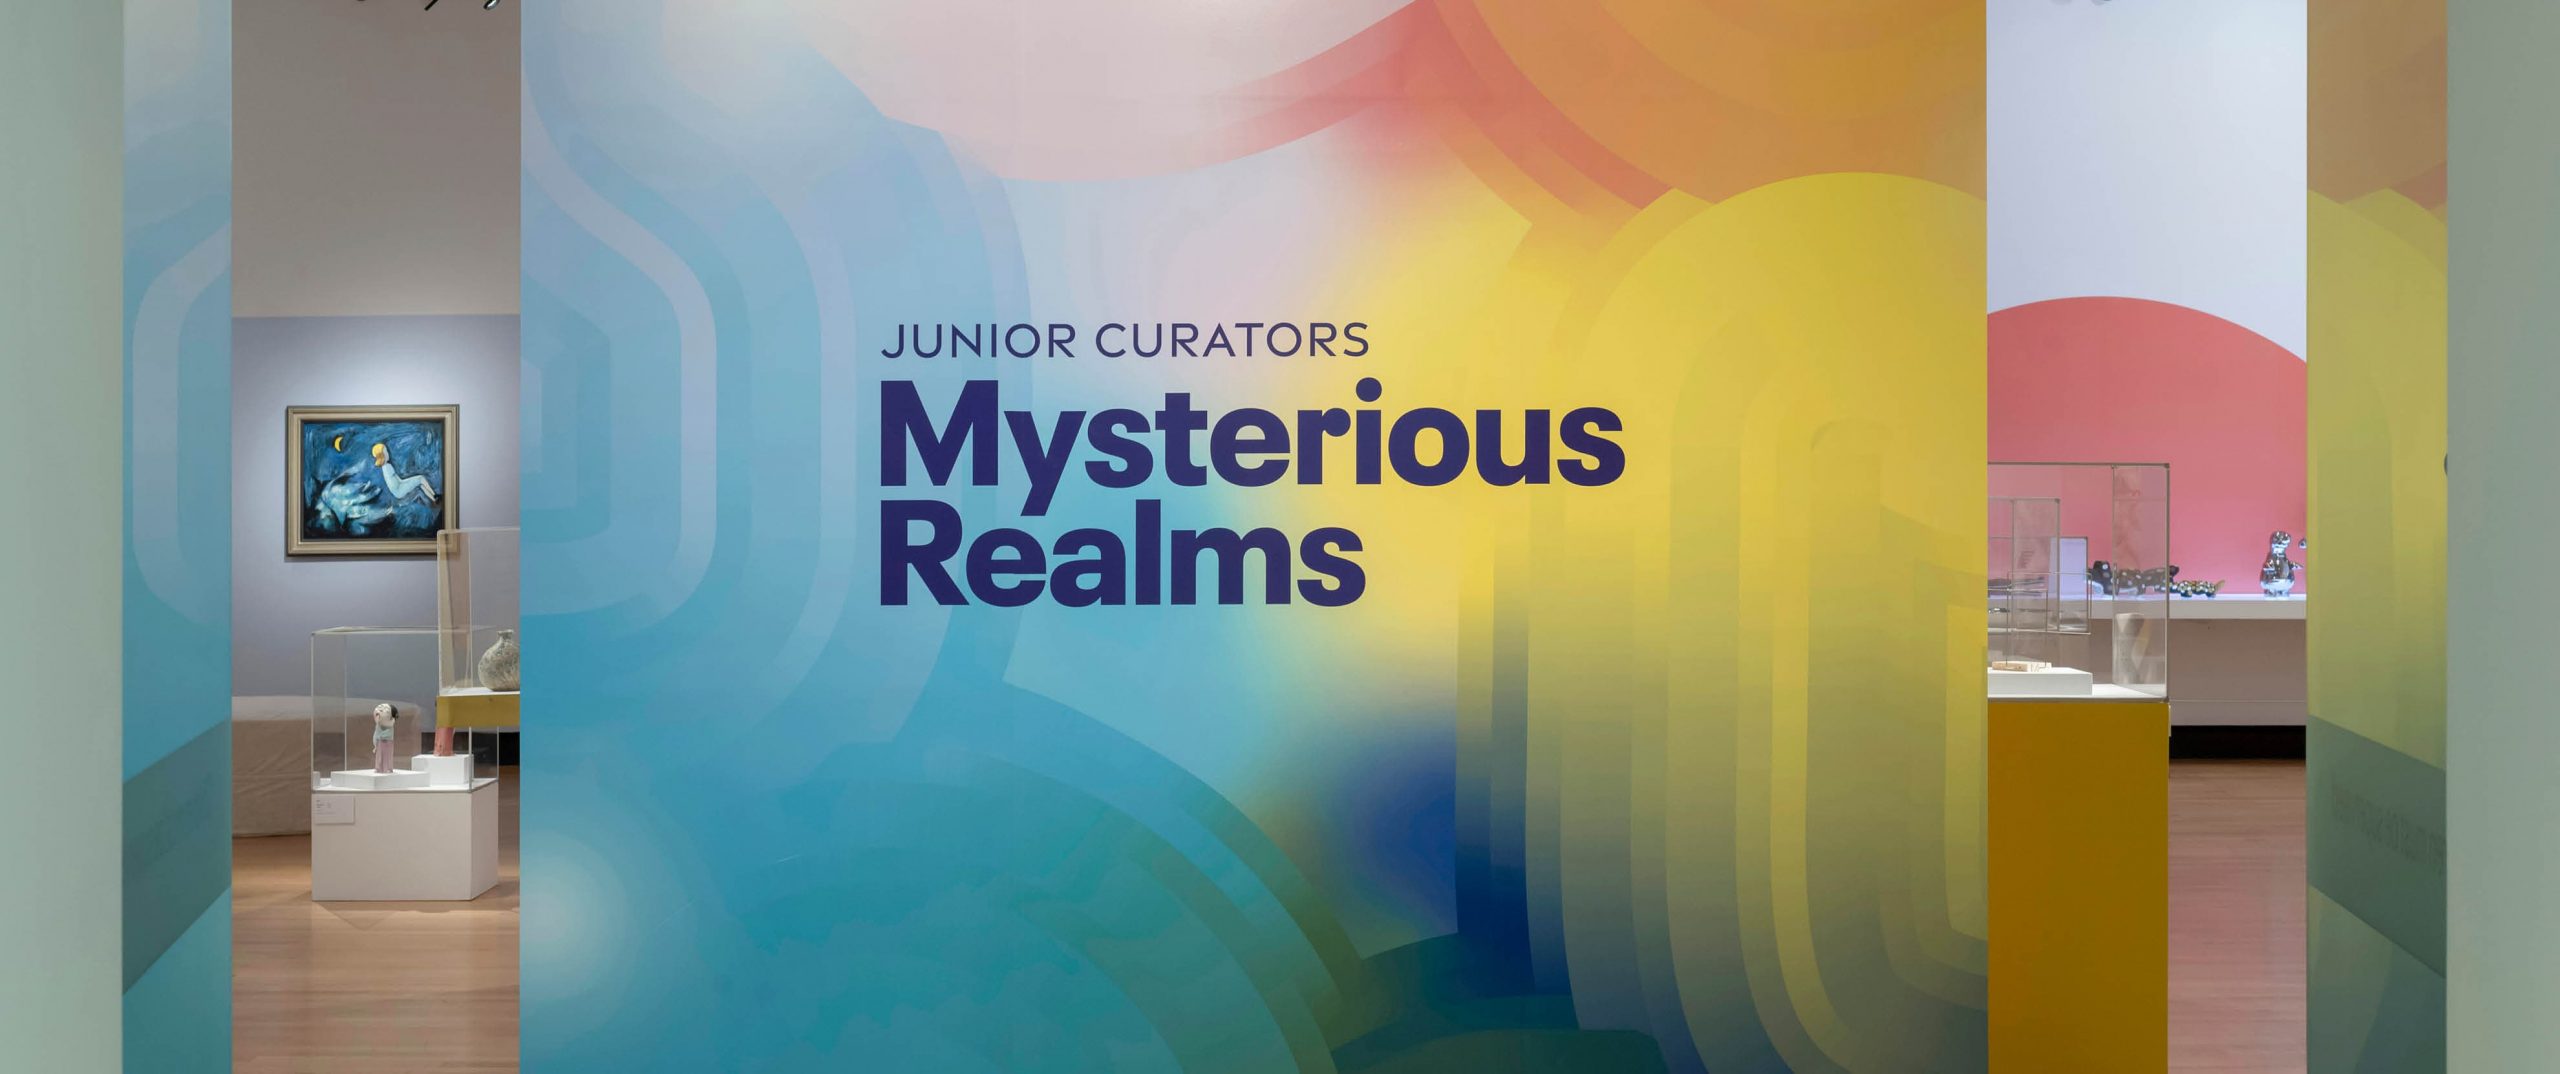 Junior Curators Mysterious Realms Exhibition